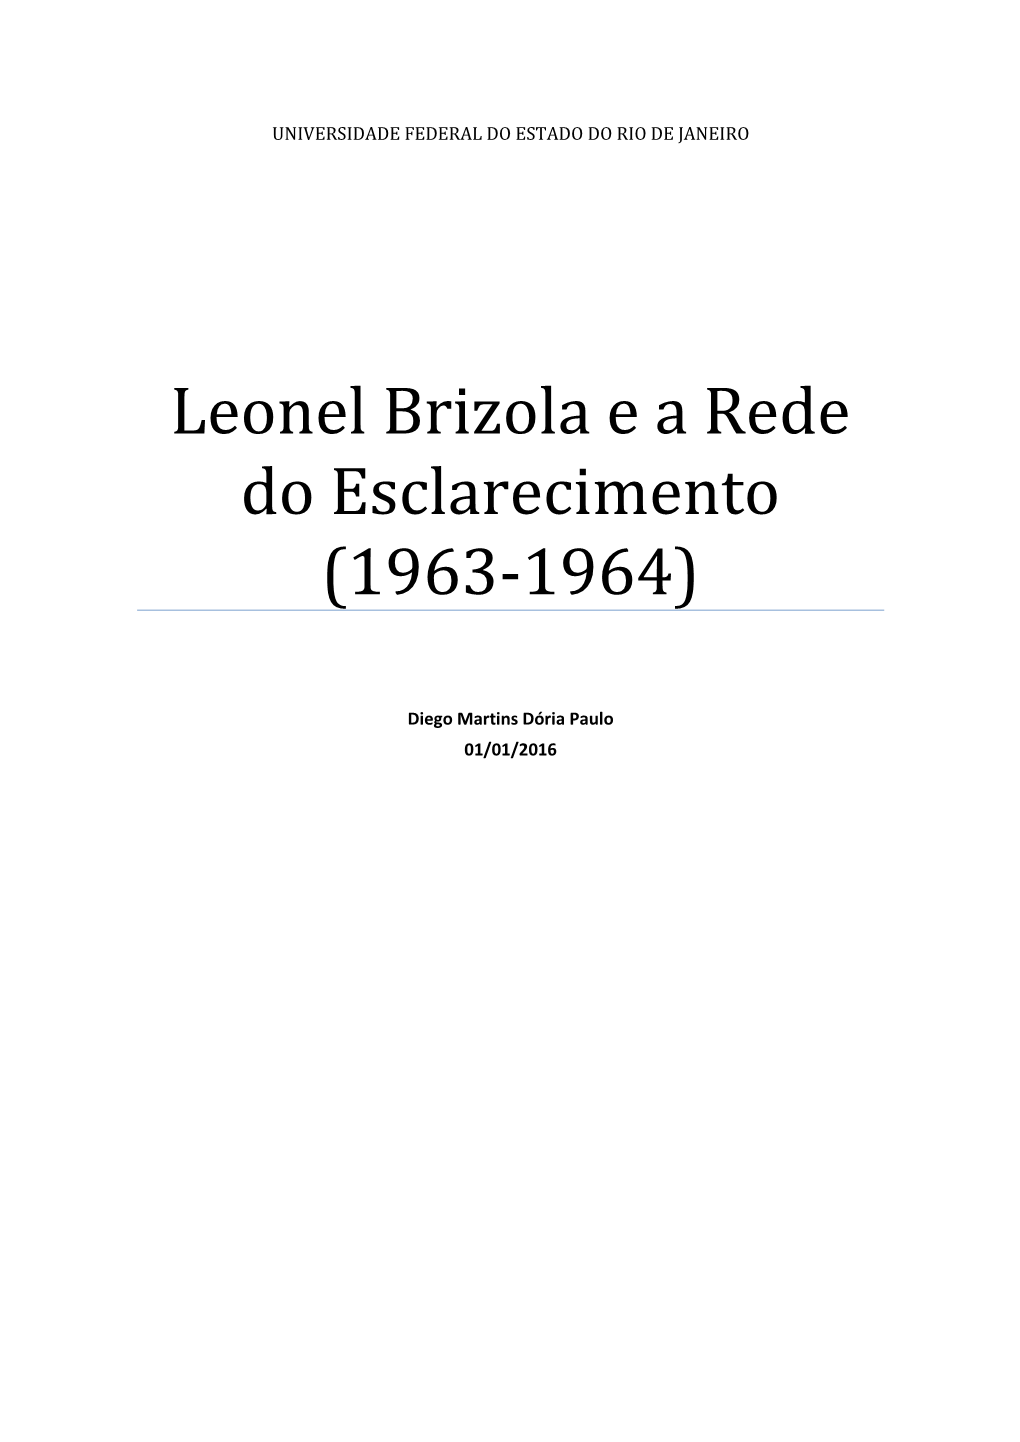 Leonel Brizola E a Rede Do Esclarecimento (1963-1964)